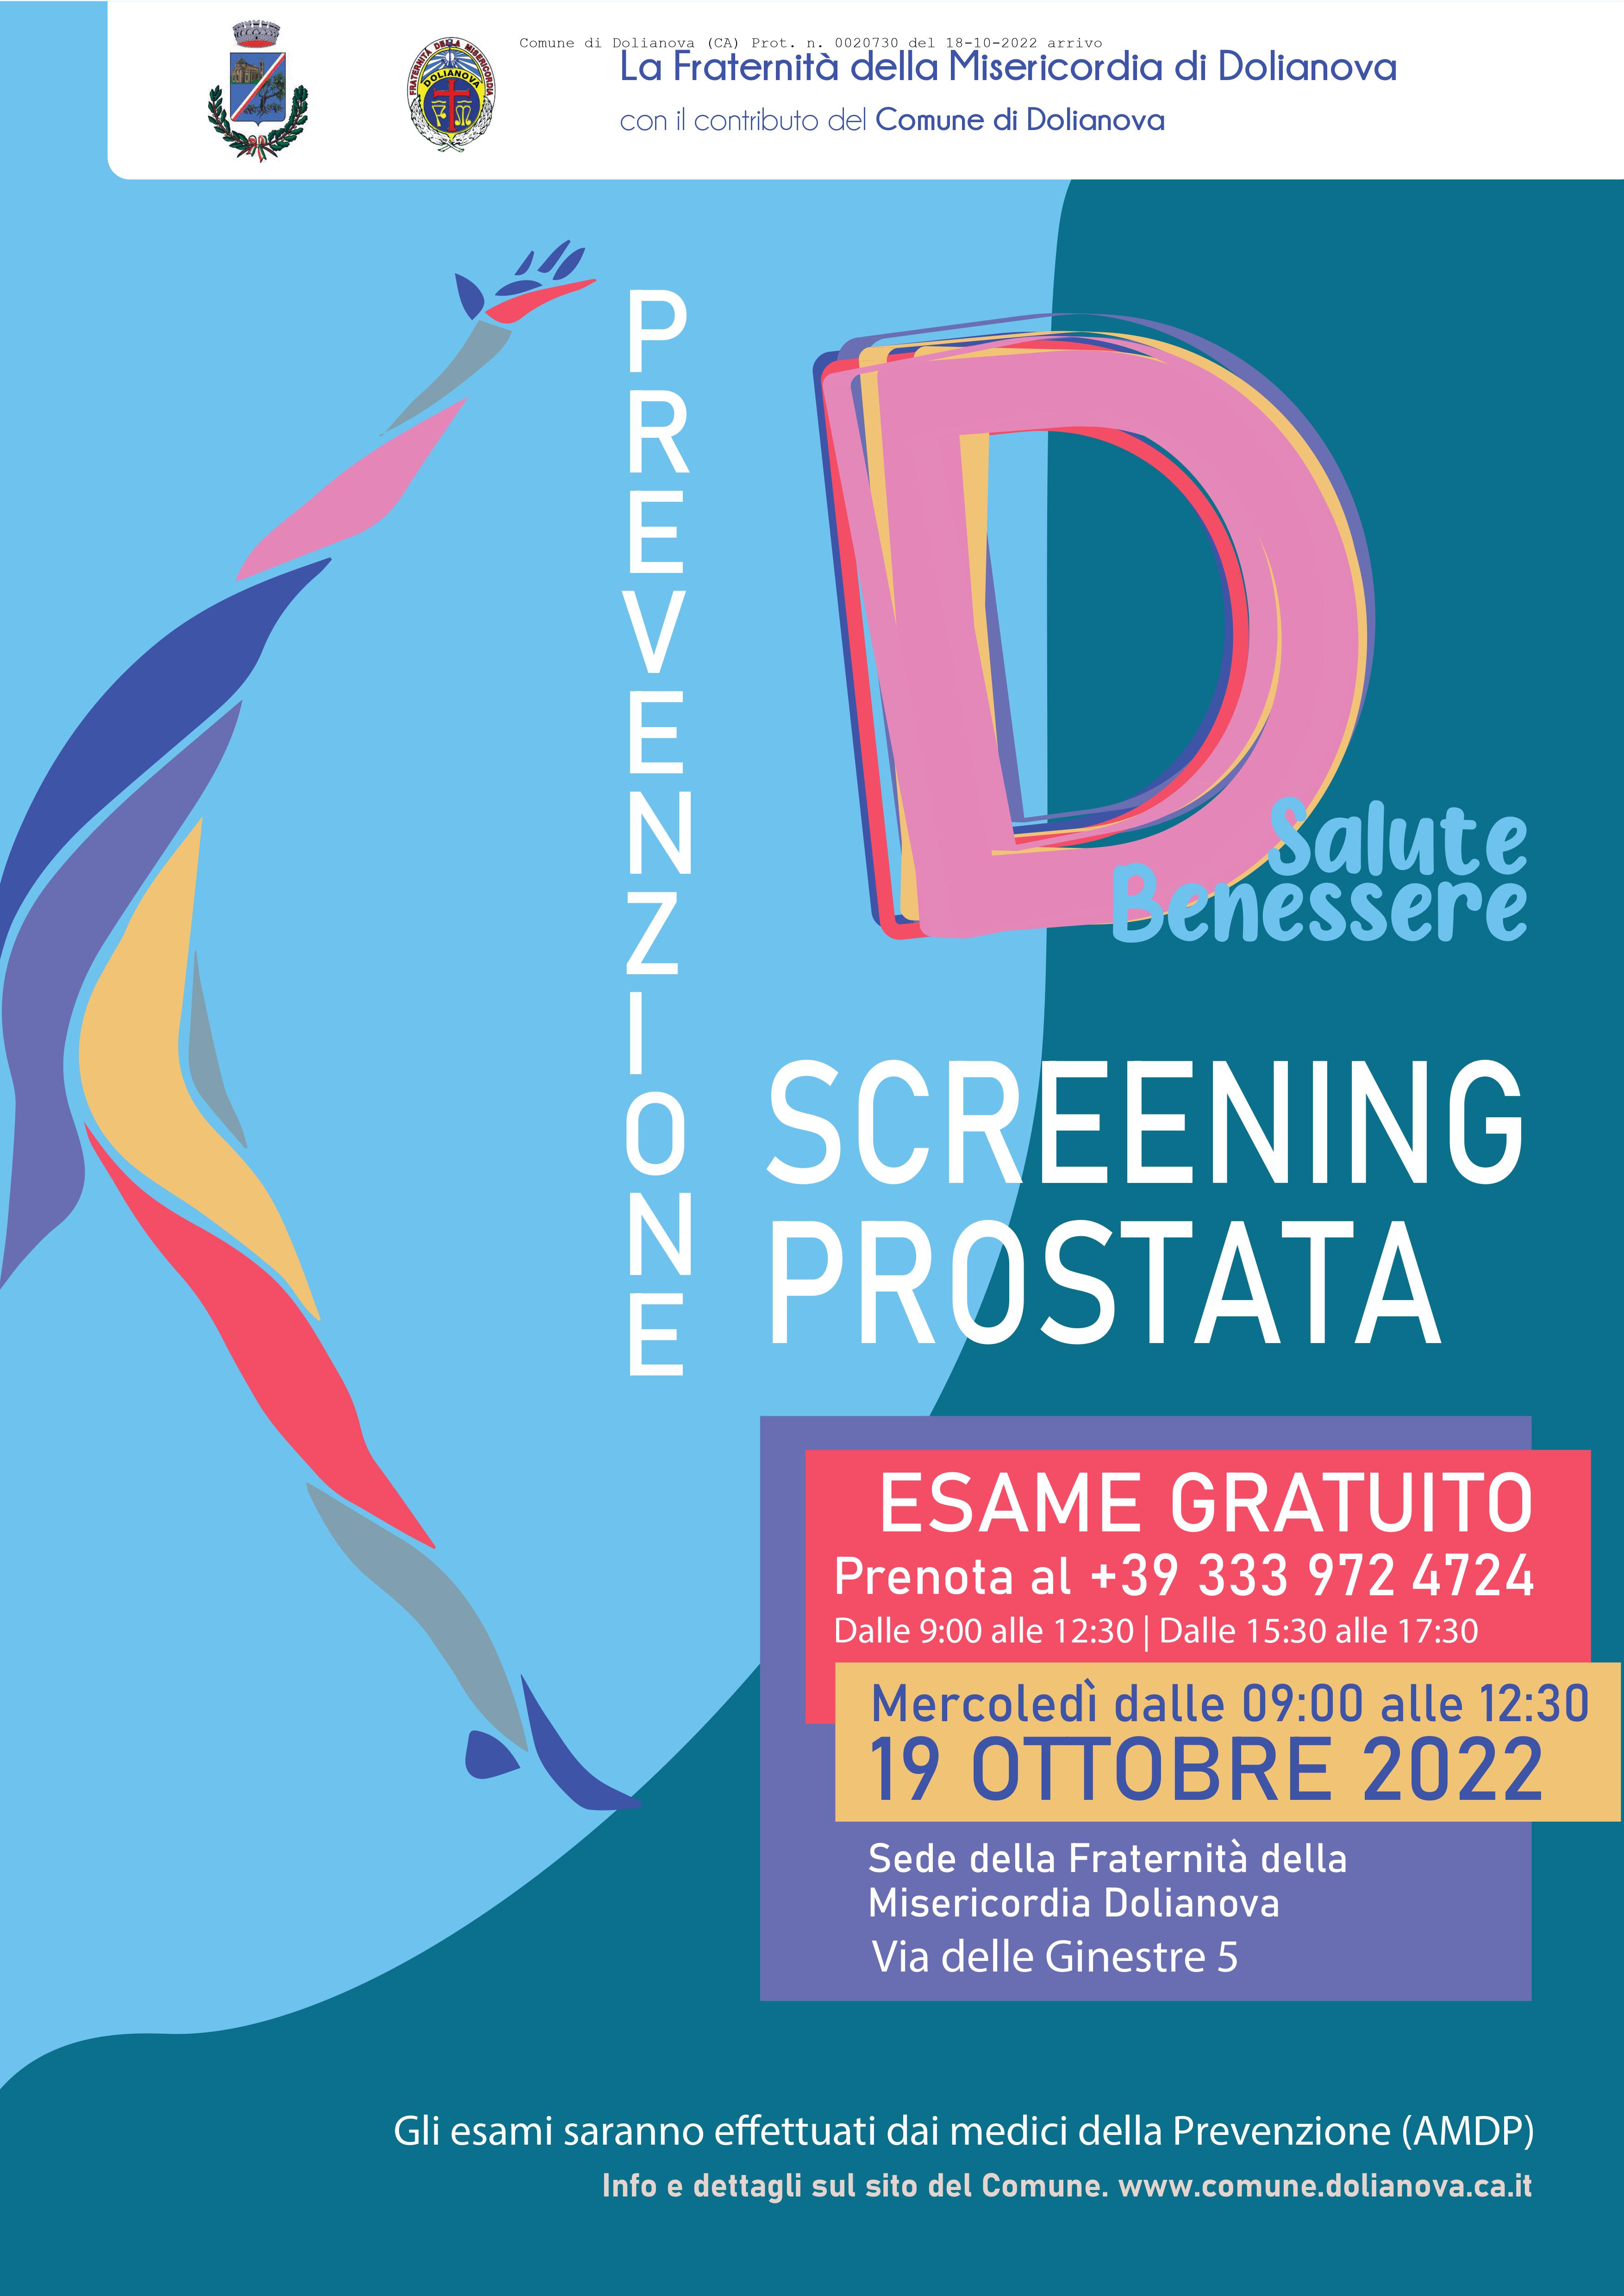 Screening ecografico Prostata